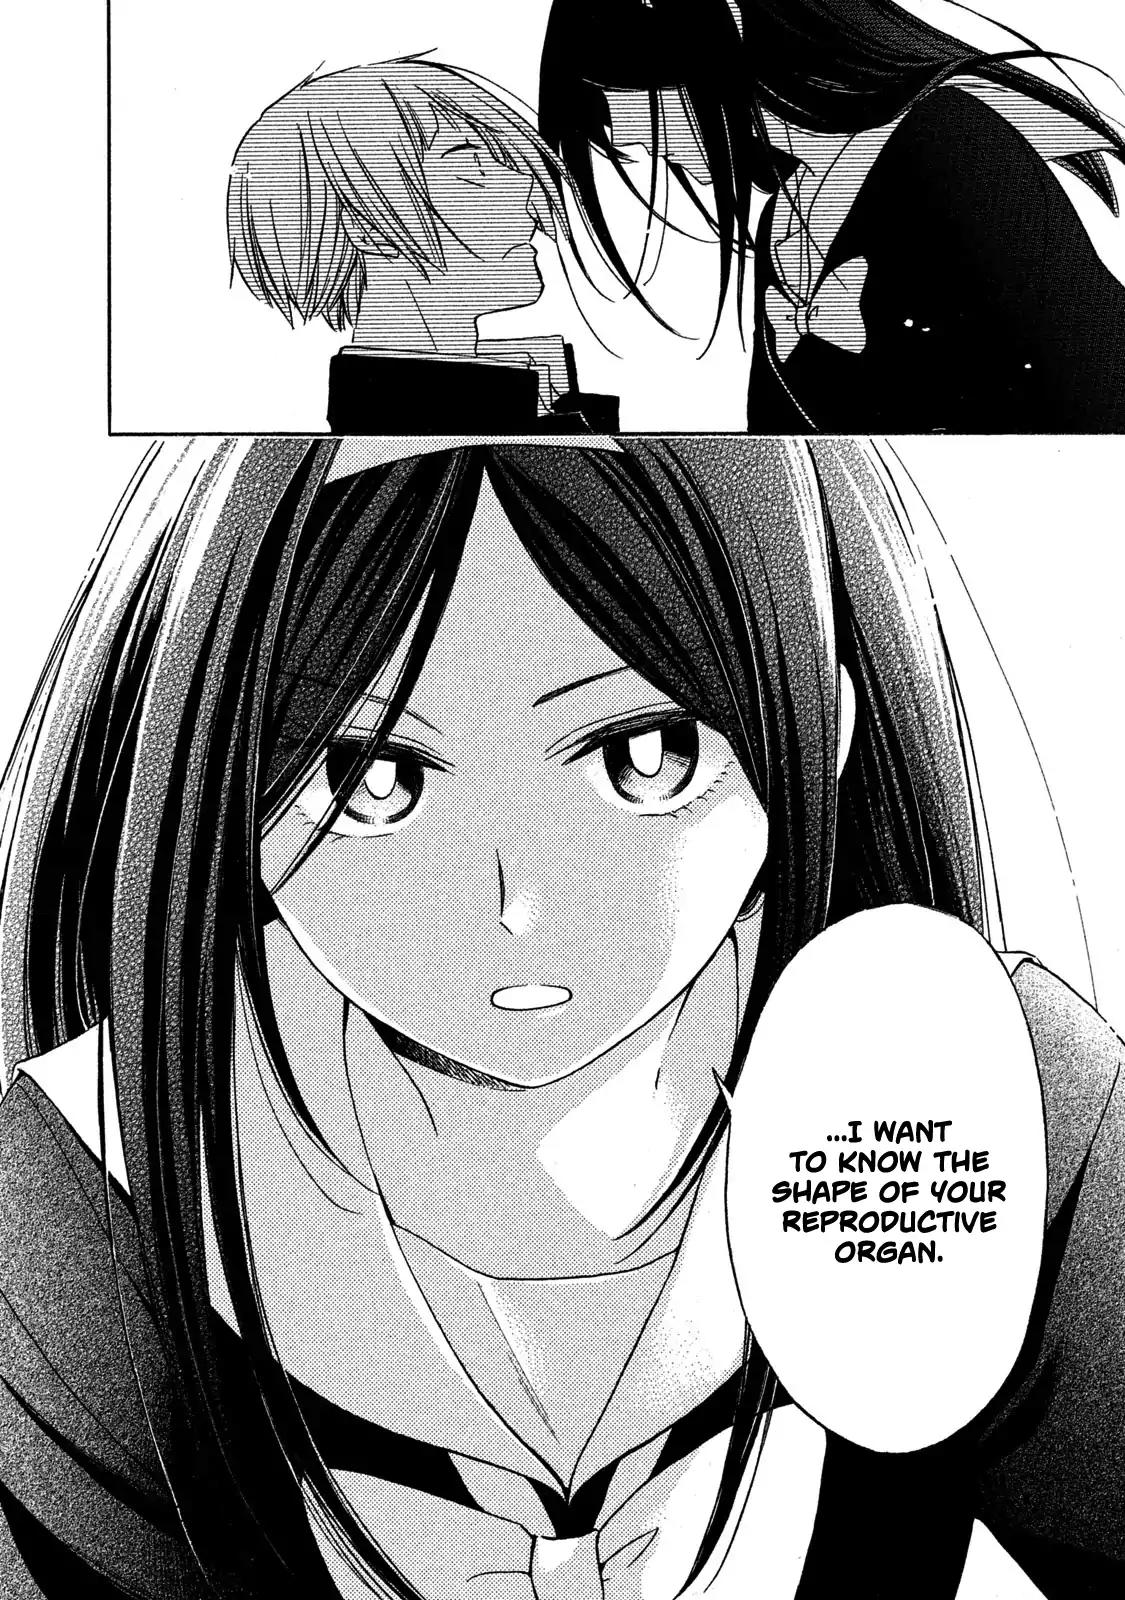 Hanazono and Kazoe's Bizarre After School Rendezvous Vol.1 Chapter 1: